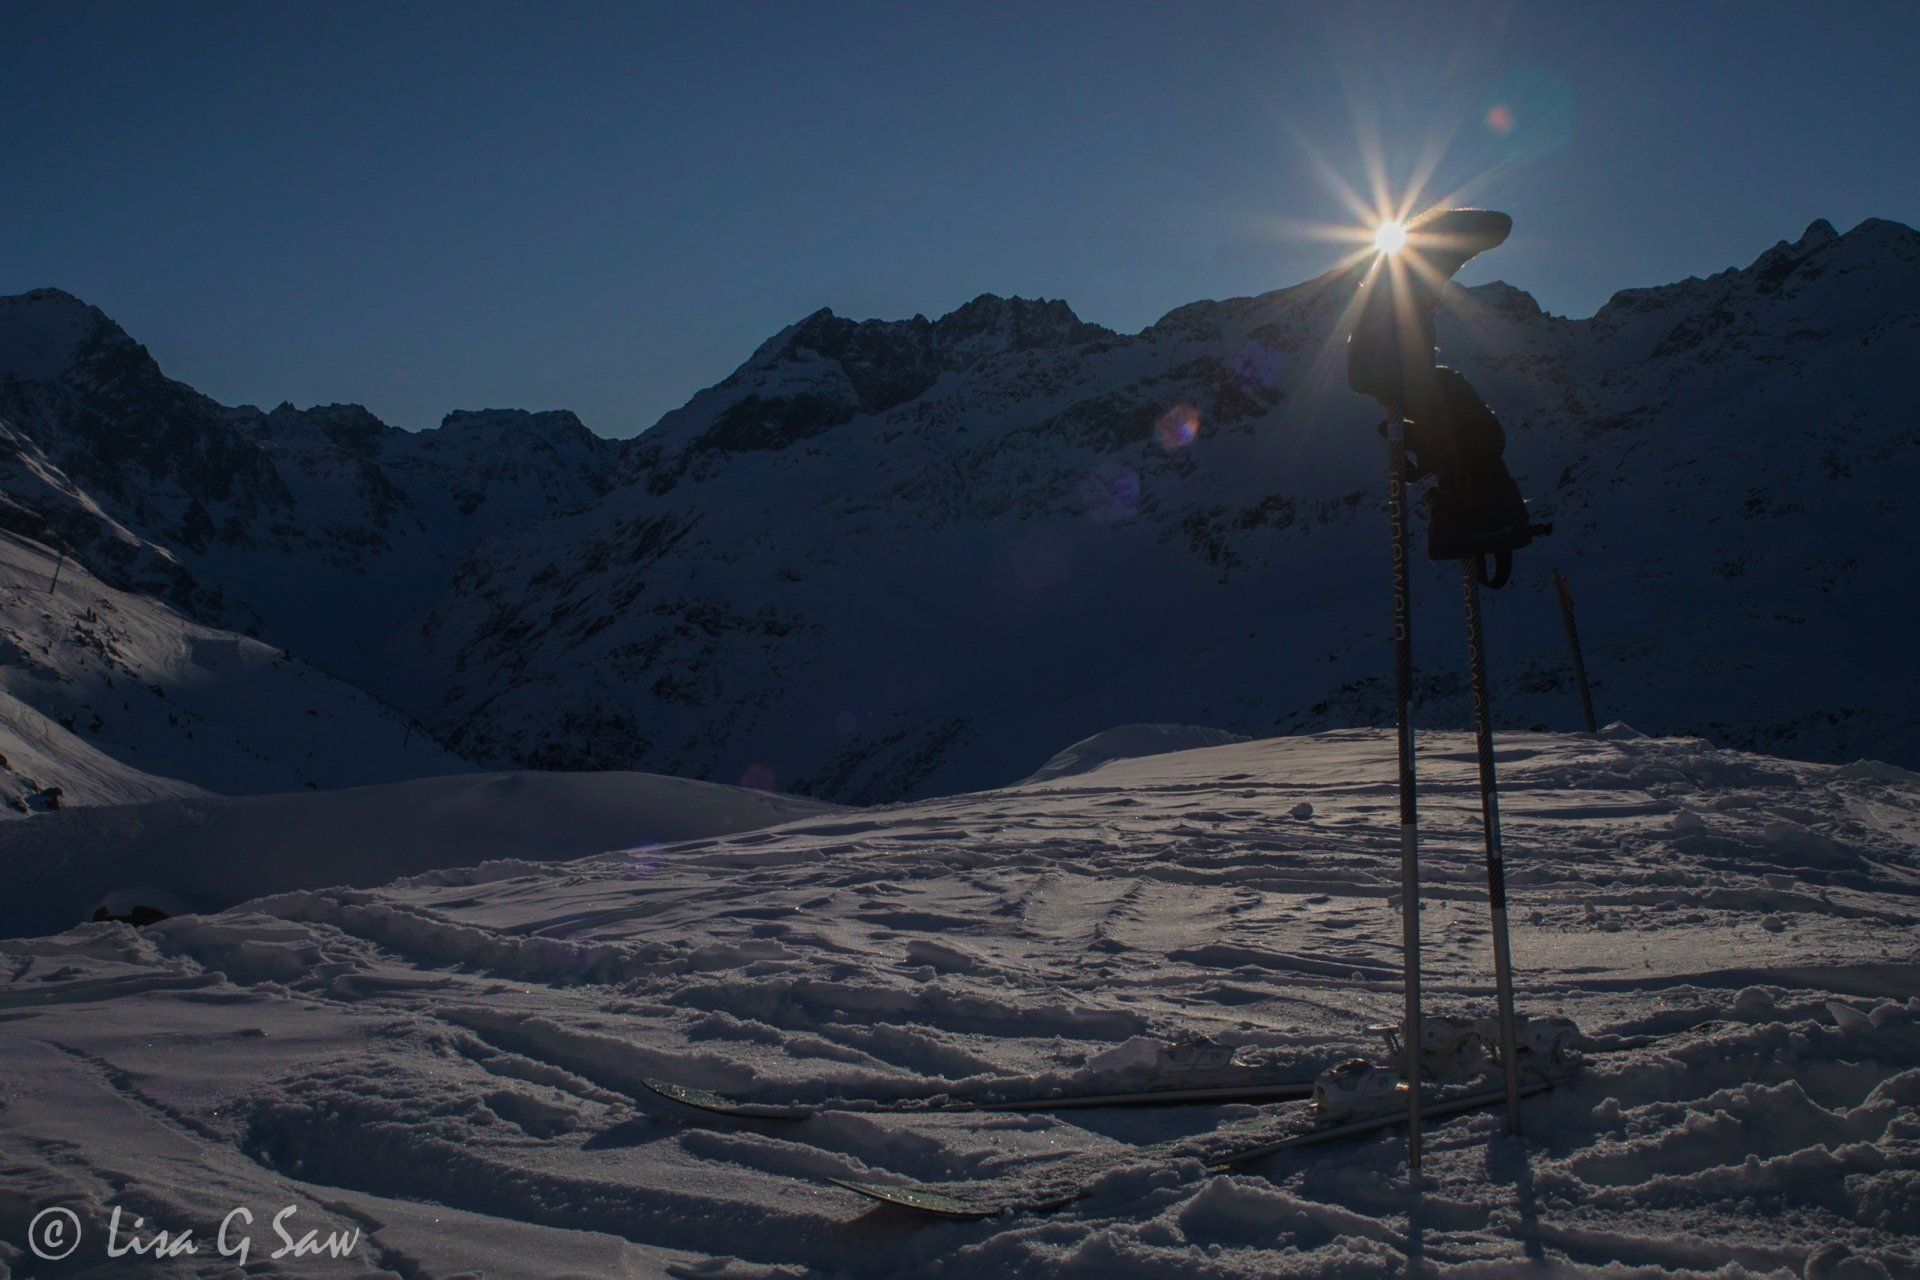 Sunburst behind mittens on ski poles with skis in snow